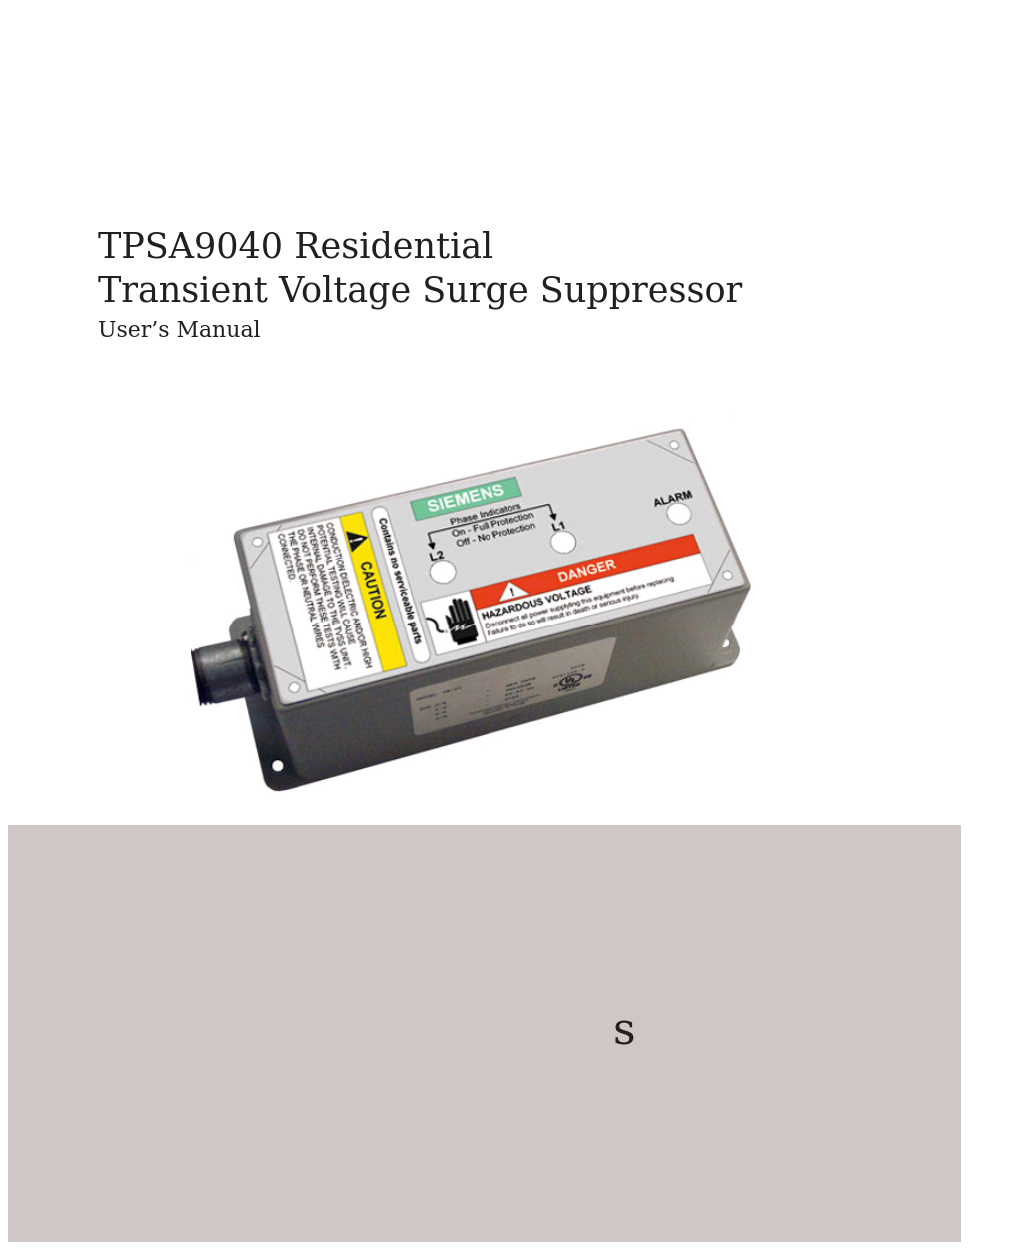 Residential Transient Voltage Surge Suppressor TPSA9040